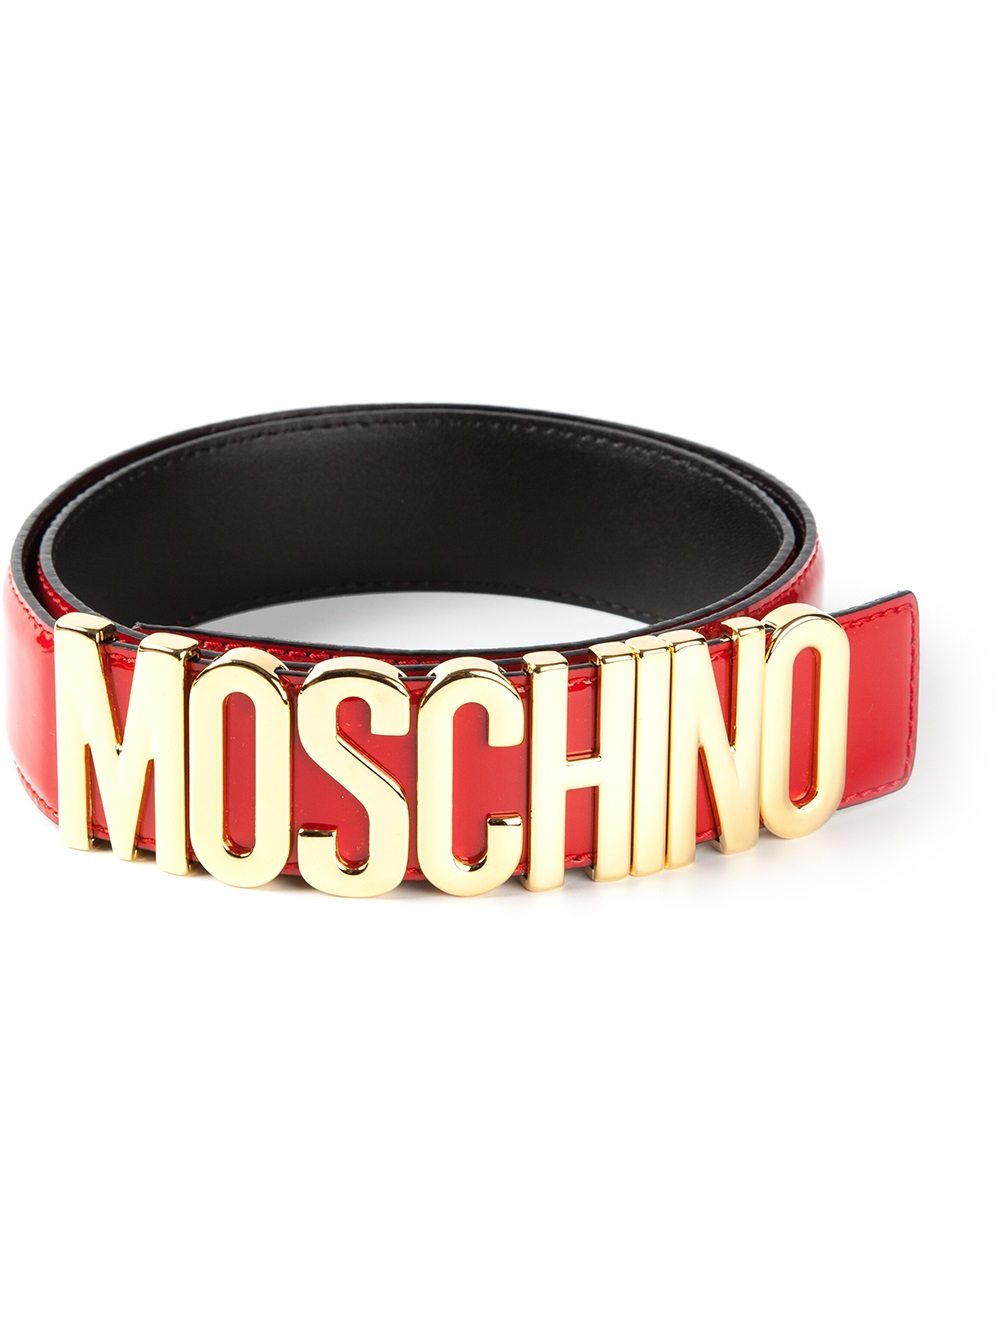 Moschino Logo Charm Belt in Red - Lyst